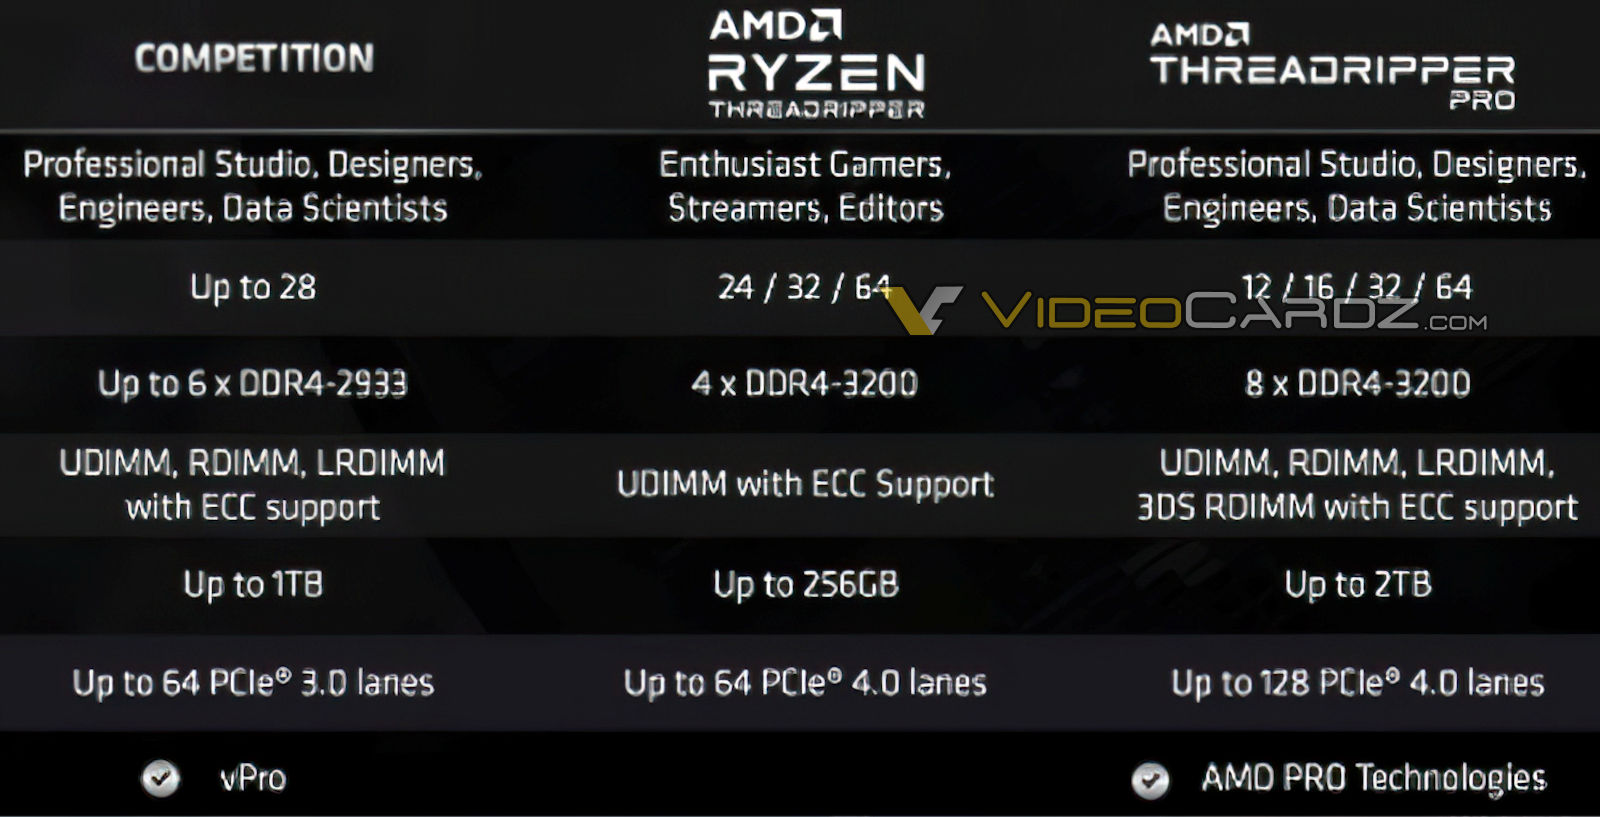 AMD Ryzen Threadripper PRO Specifications